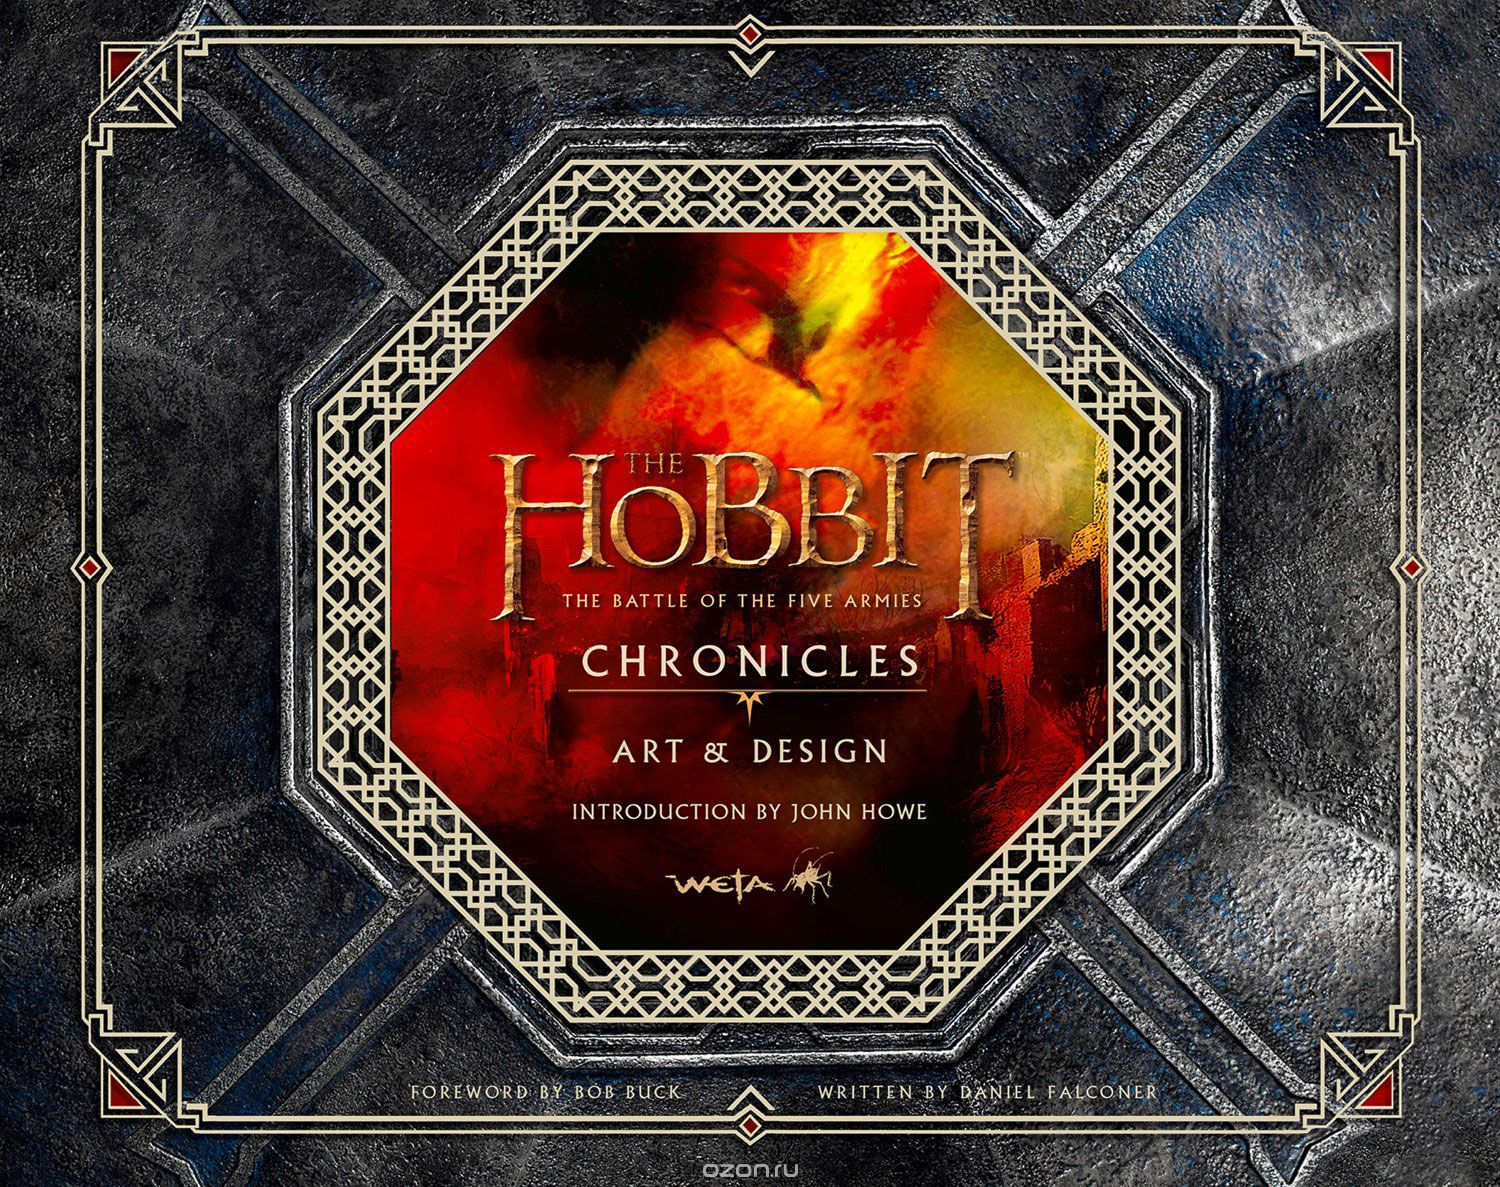 Скачать книгу "Chronicles: Art & Design: The Hobbit: The Battle of the Five Armies"